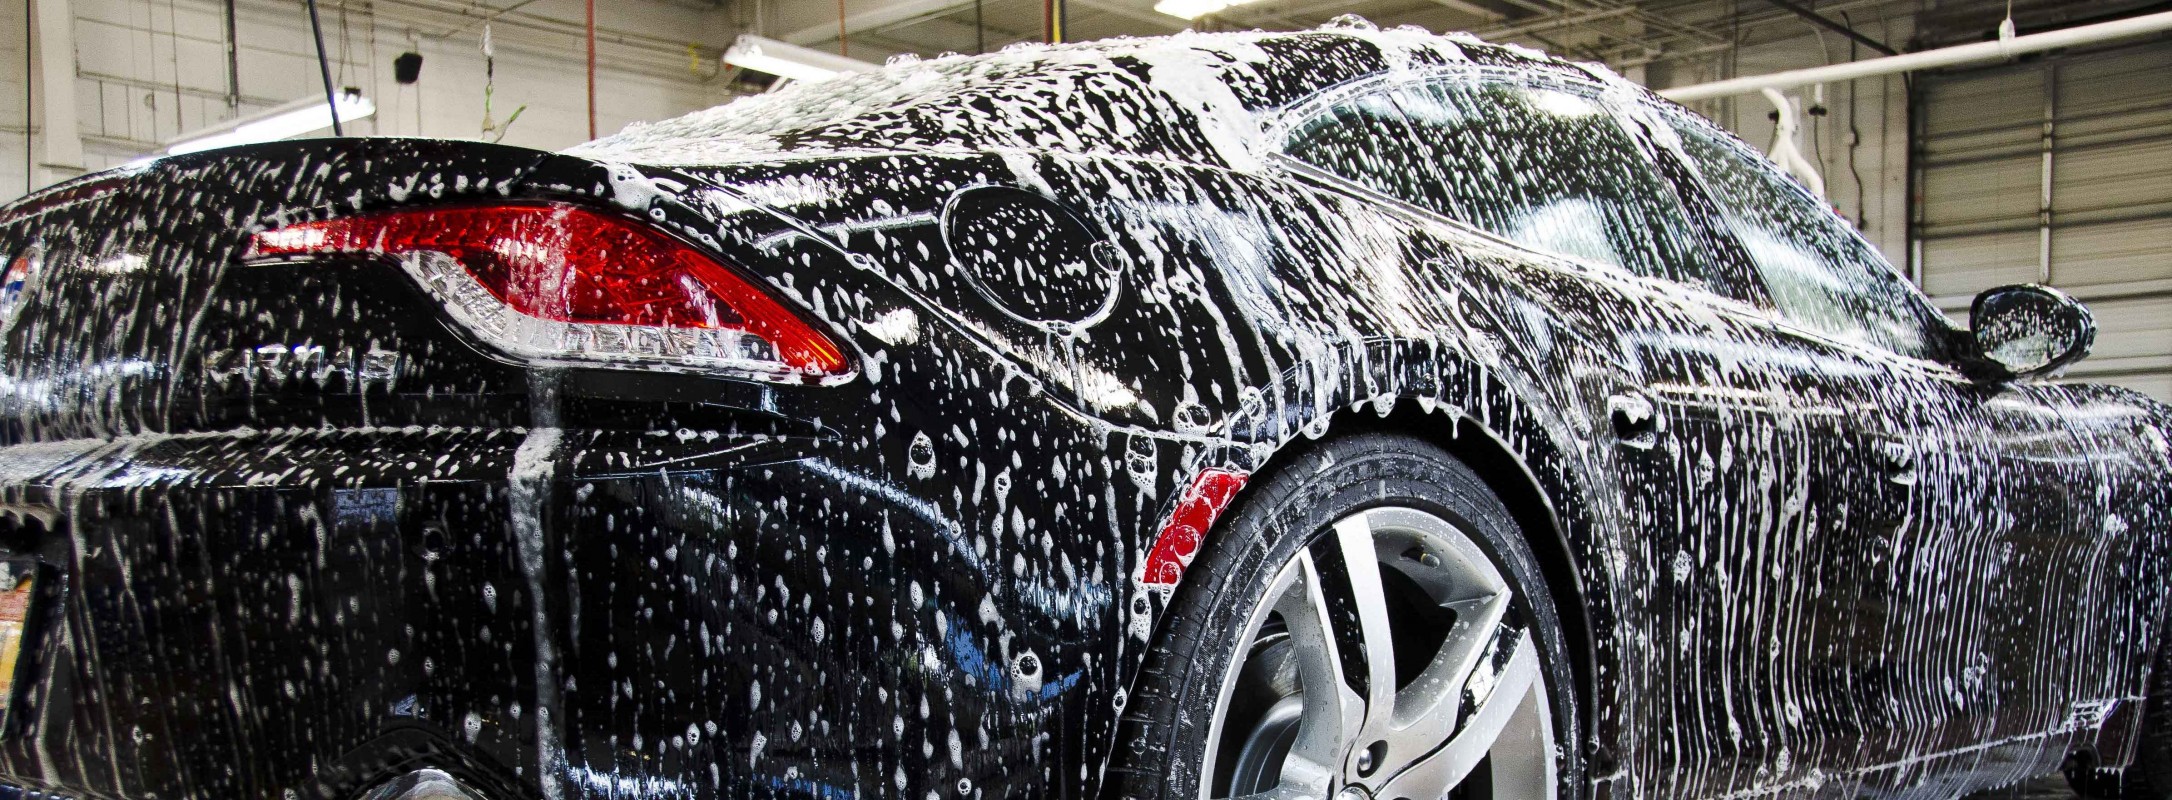 Car wash dildo